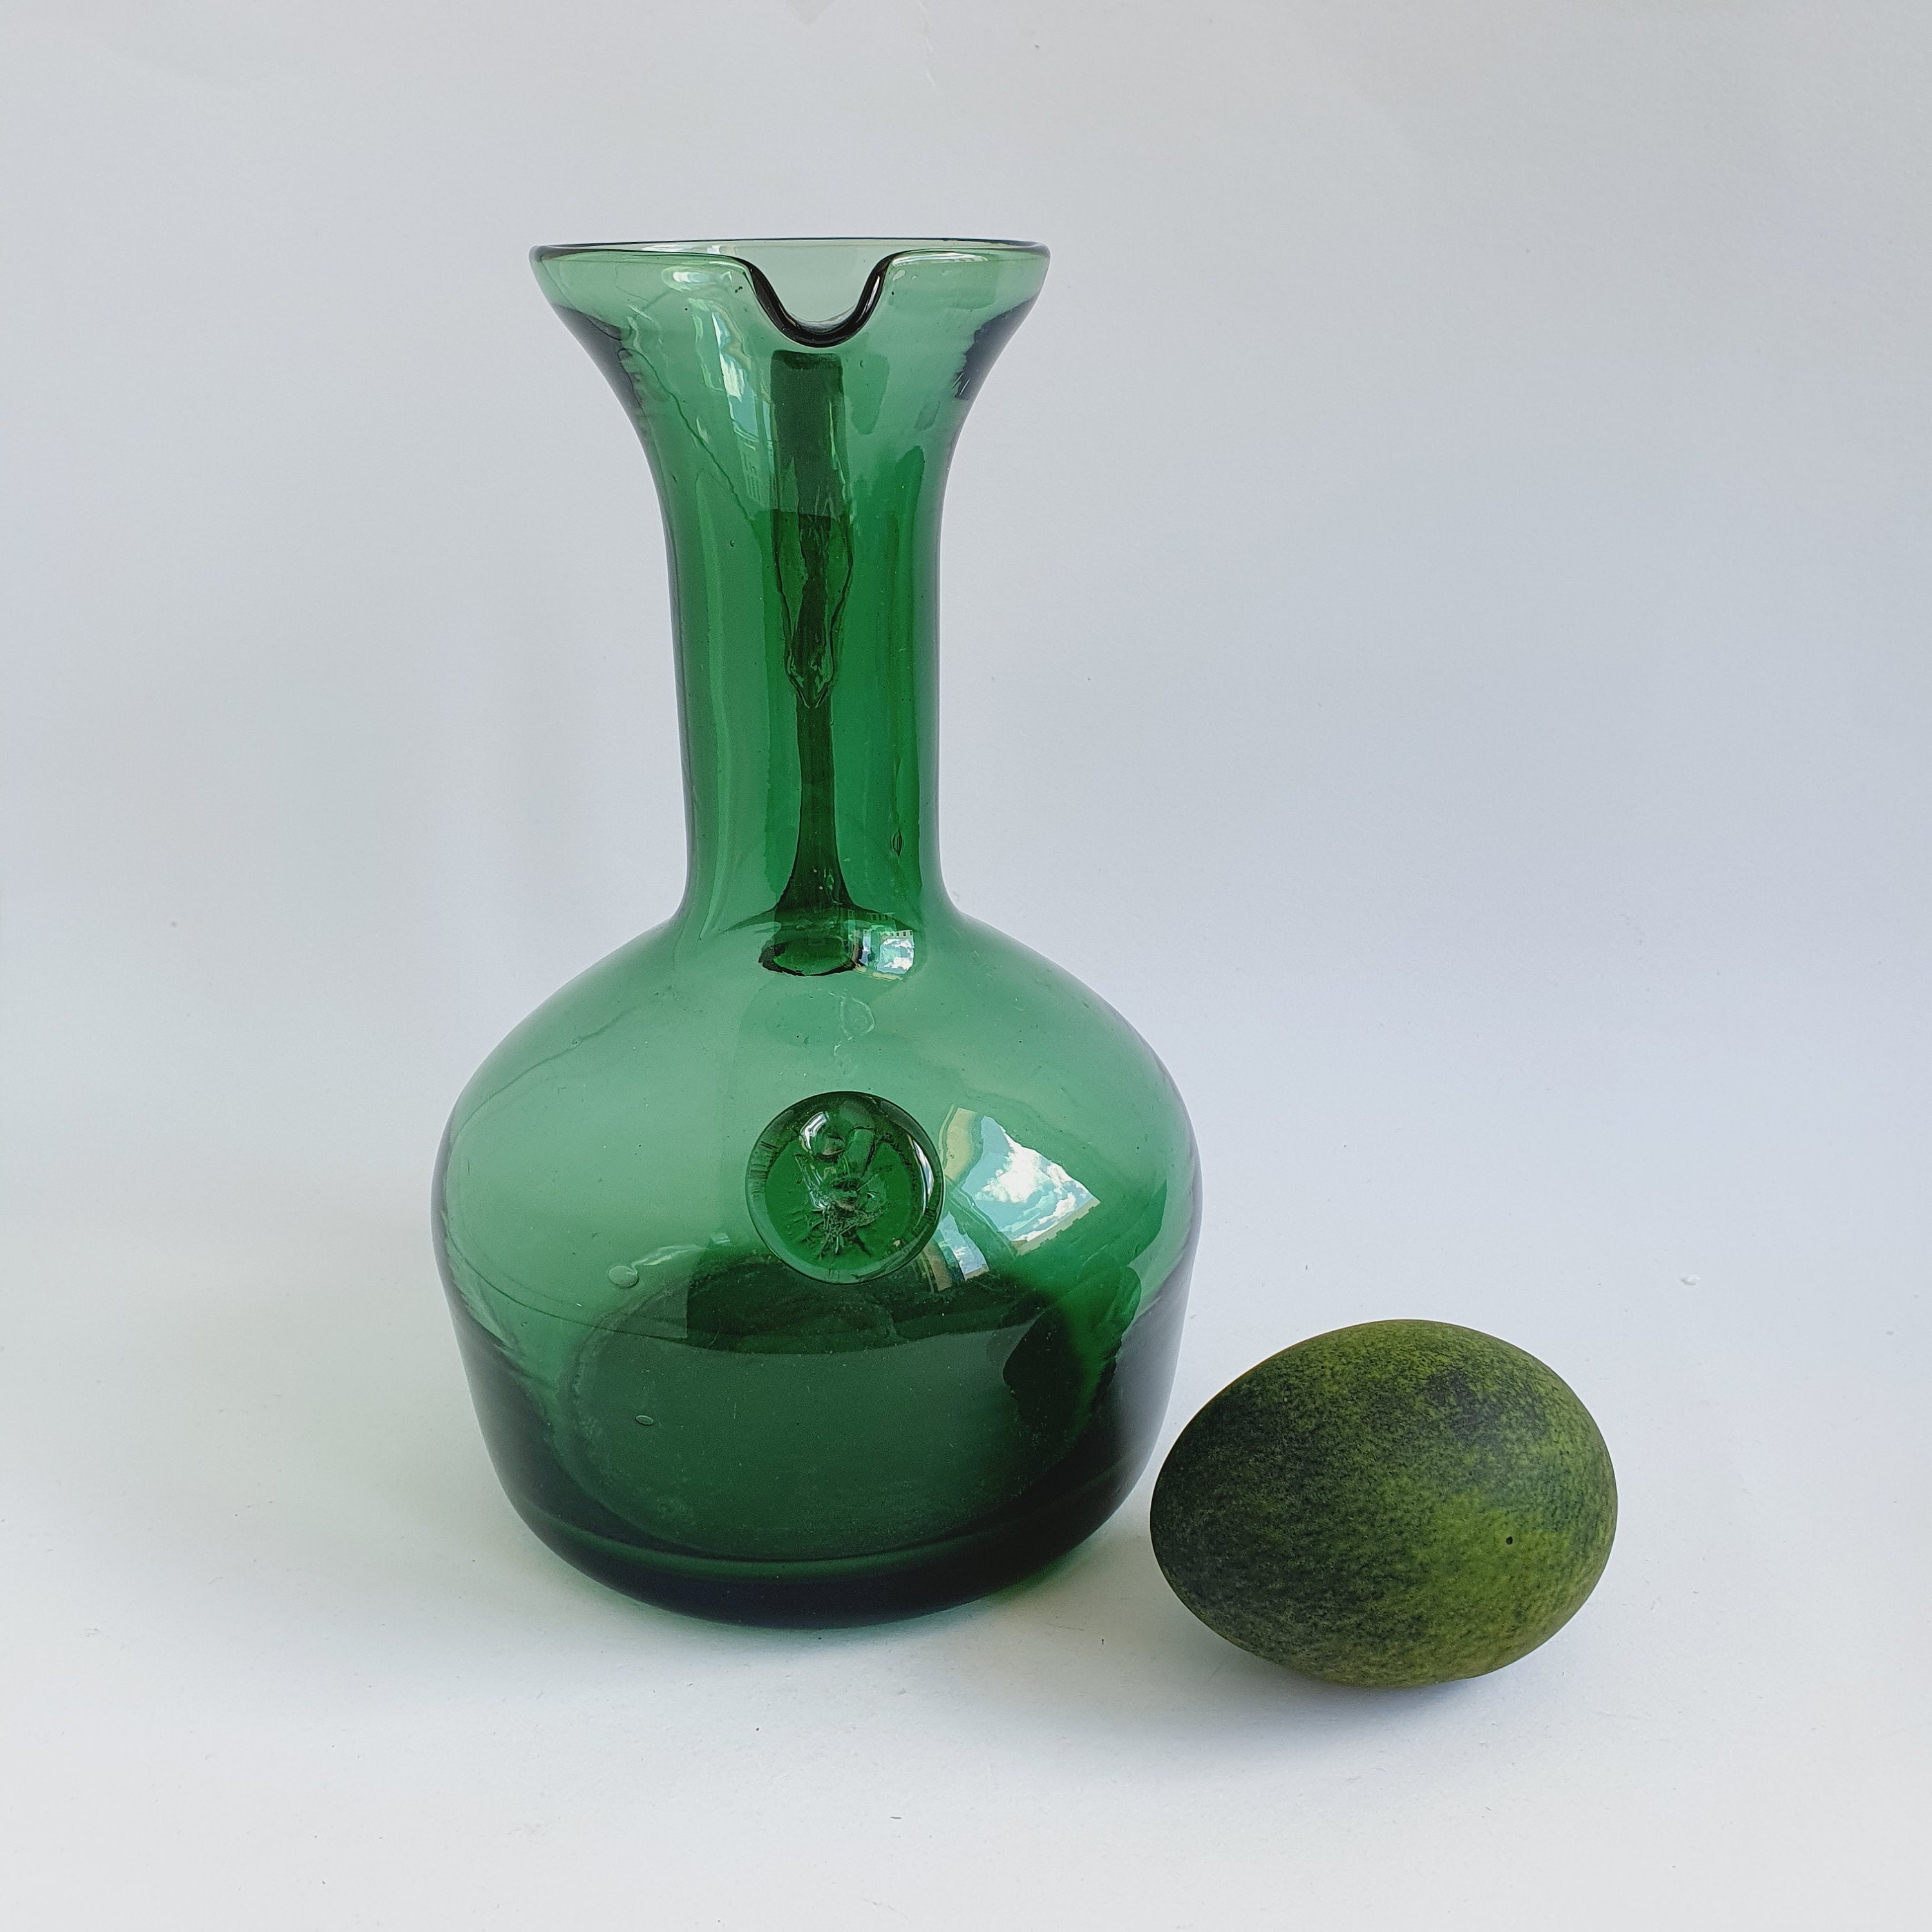 Holmegaard Emerald Green Jug 22 cm Vintage Tall Glass Pitcher | Etsy